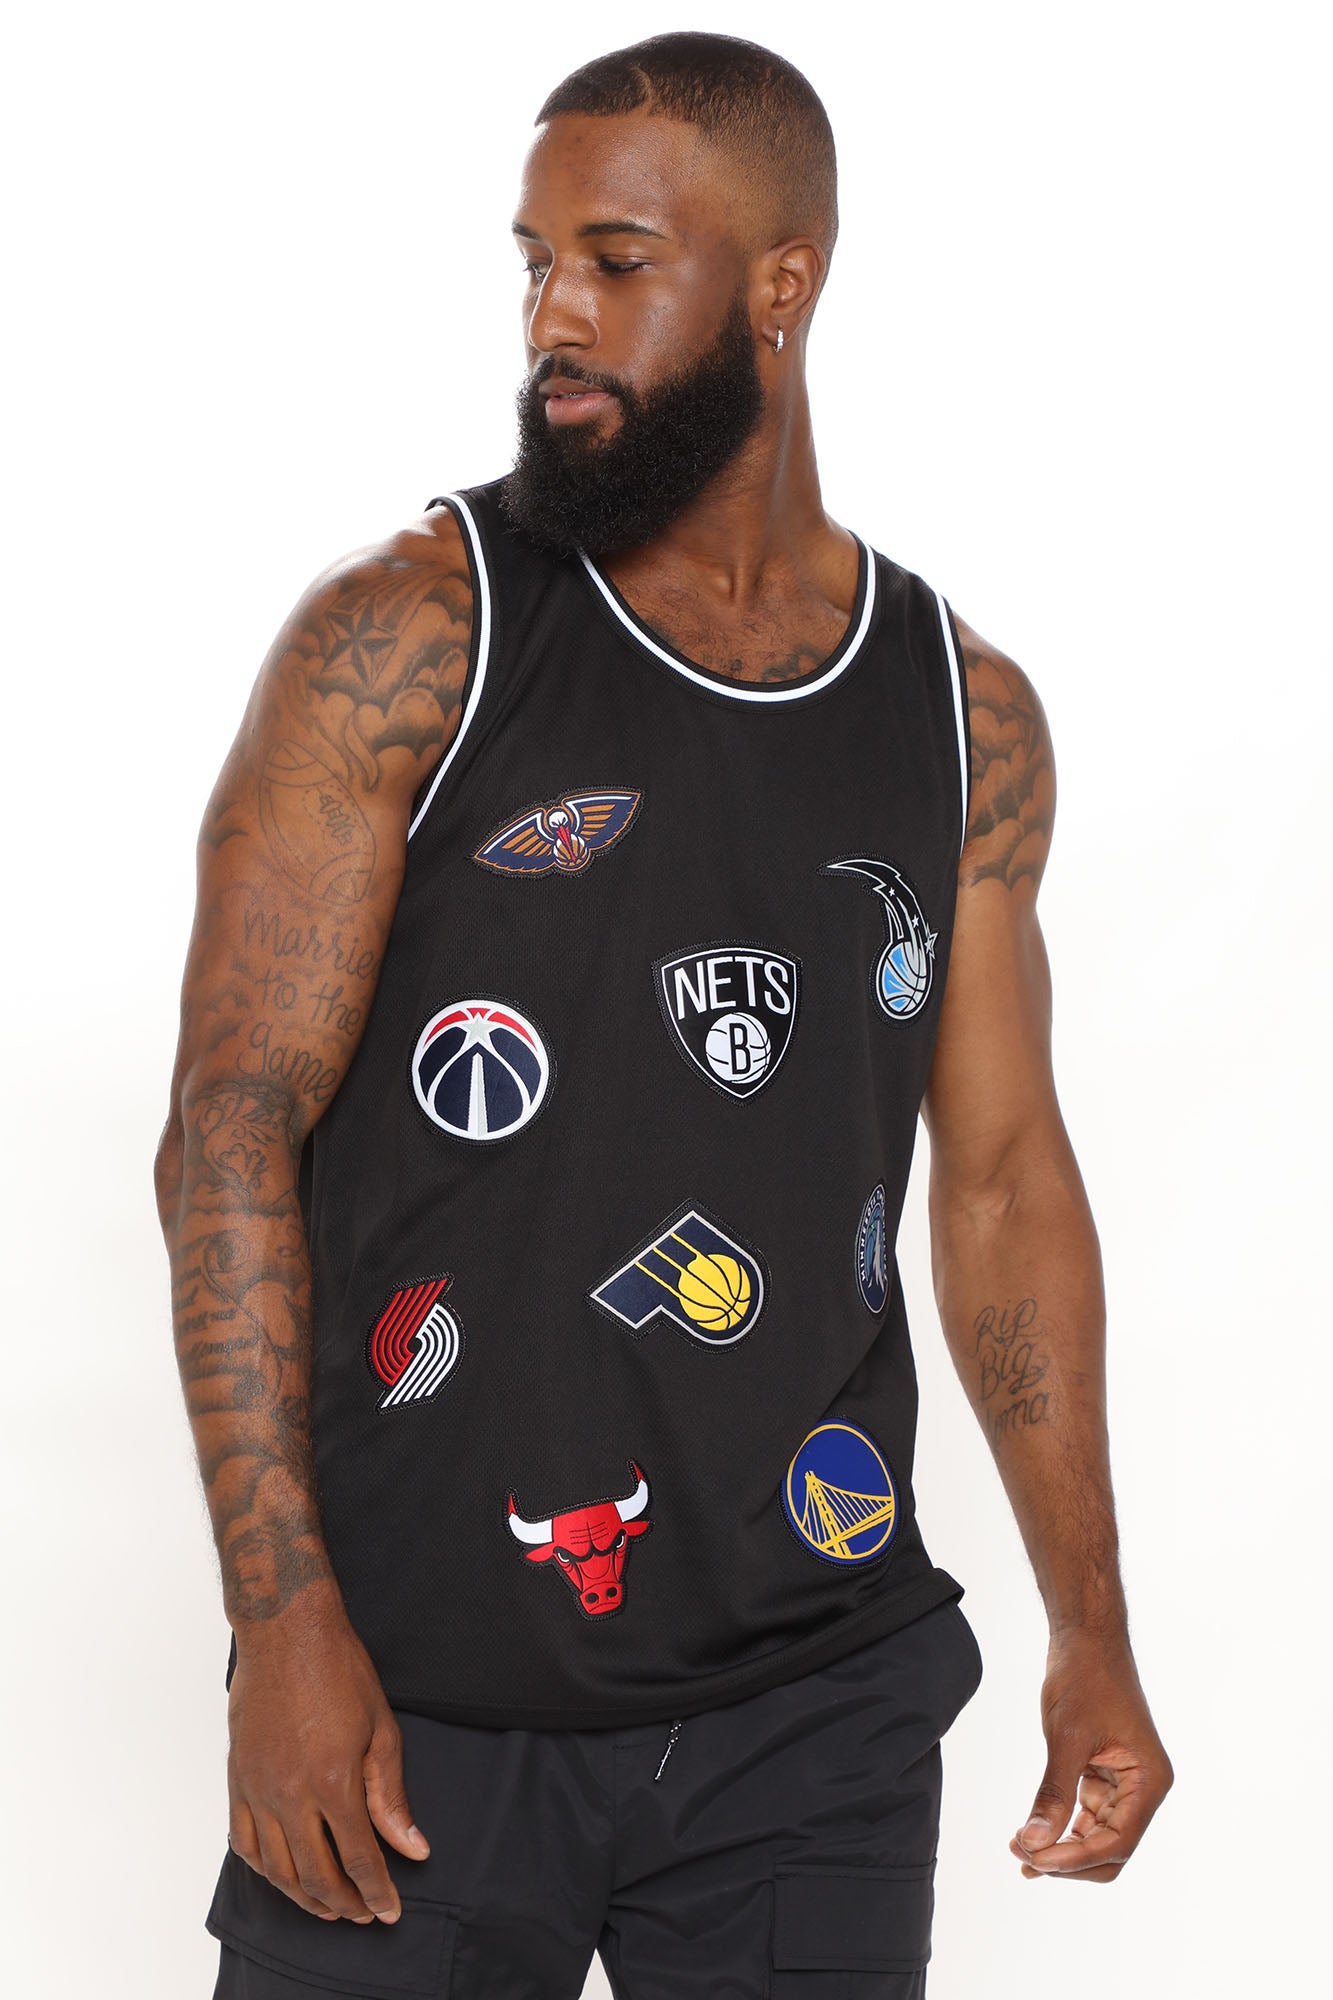 NBA Tank Tops, NBA Sleeveless Shirts, Tanks